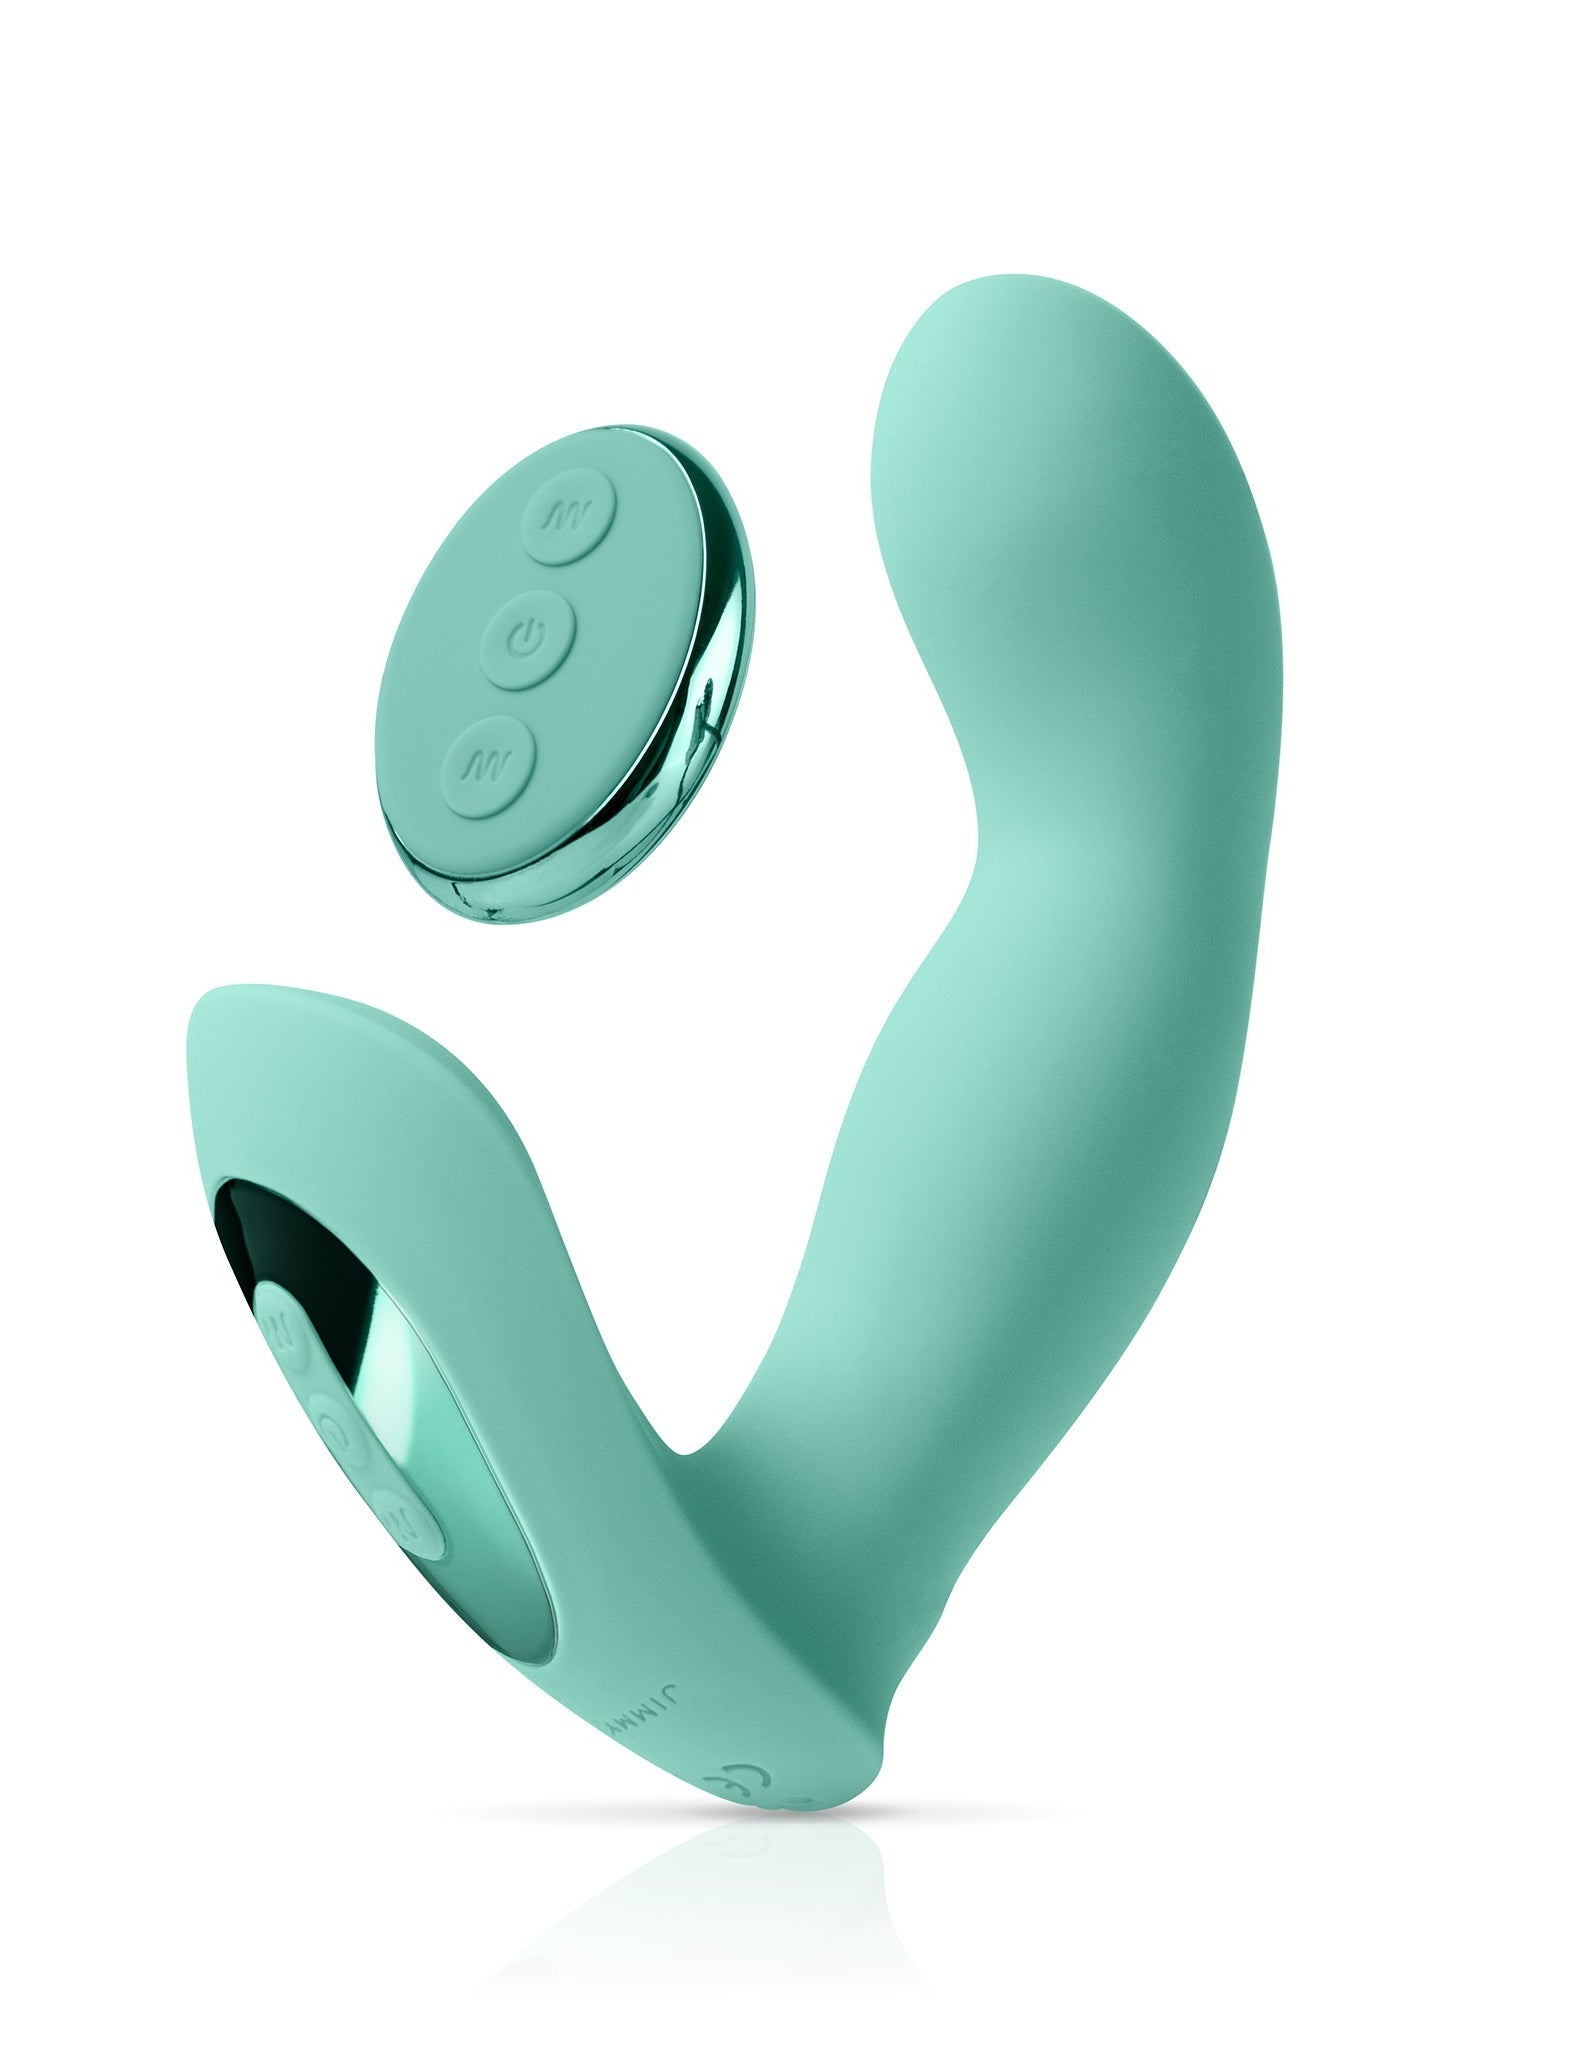 Pulsus G-Spot Vibrator for women green color